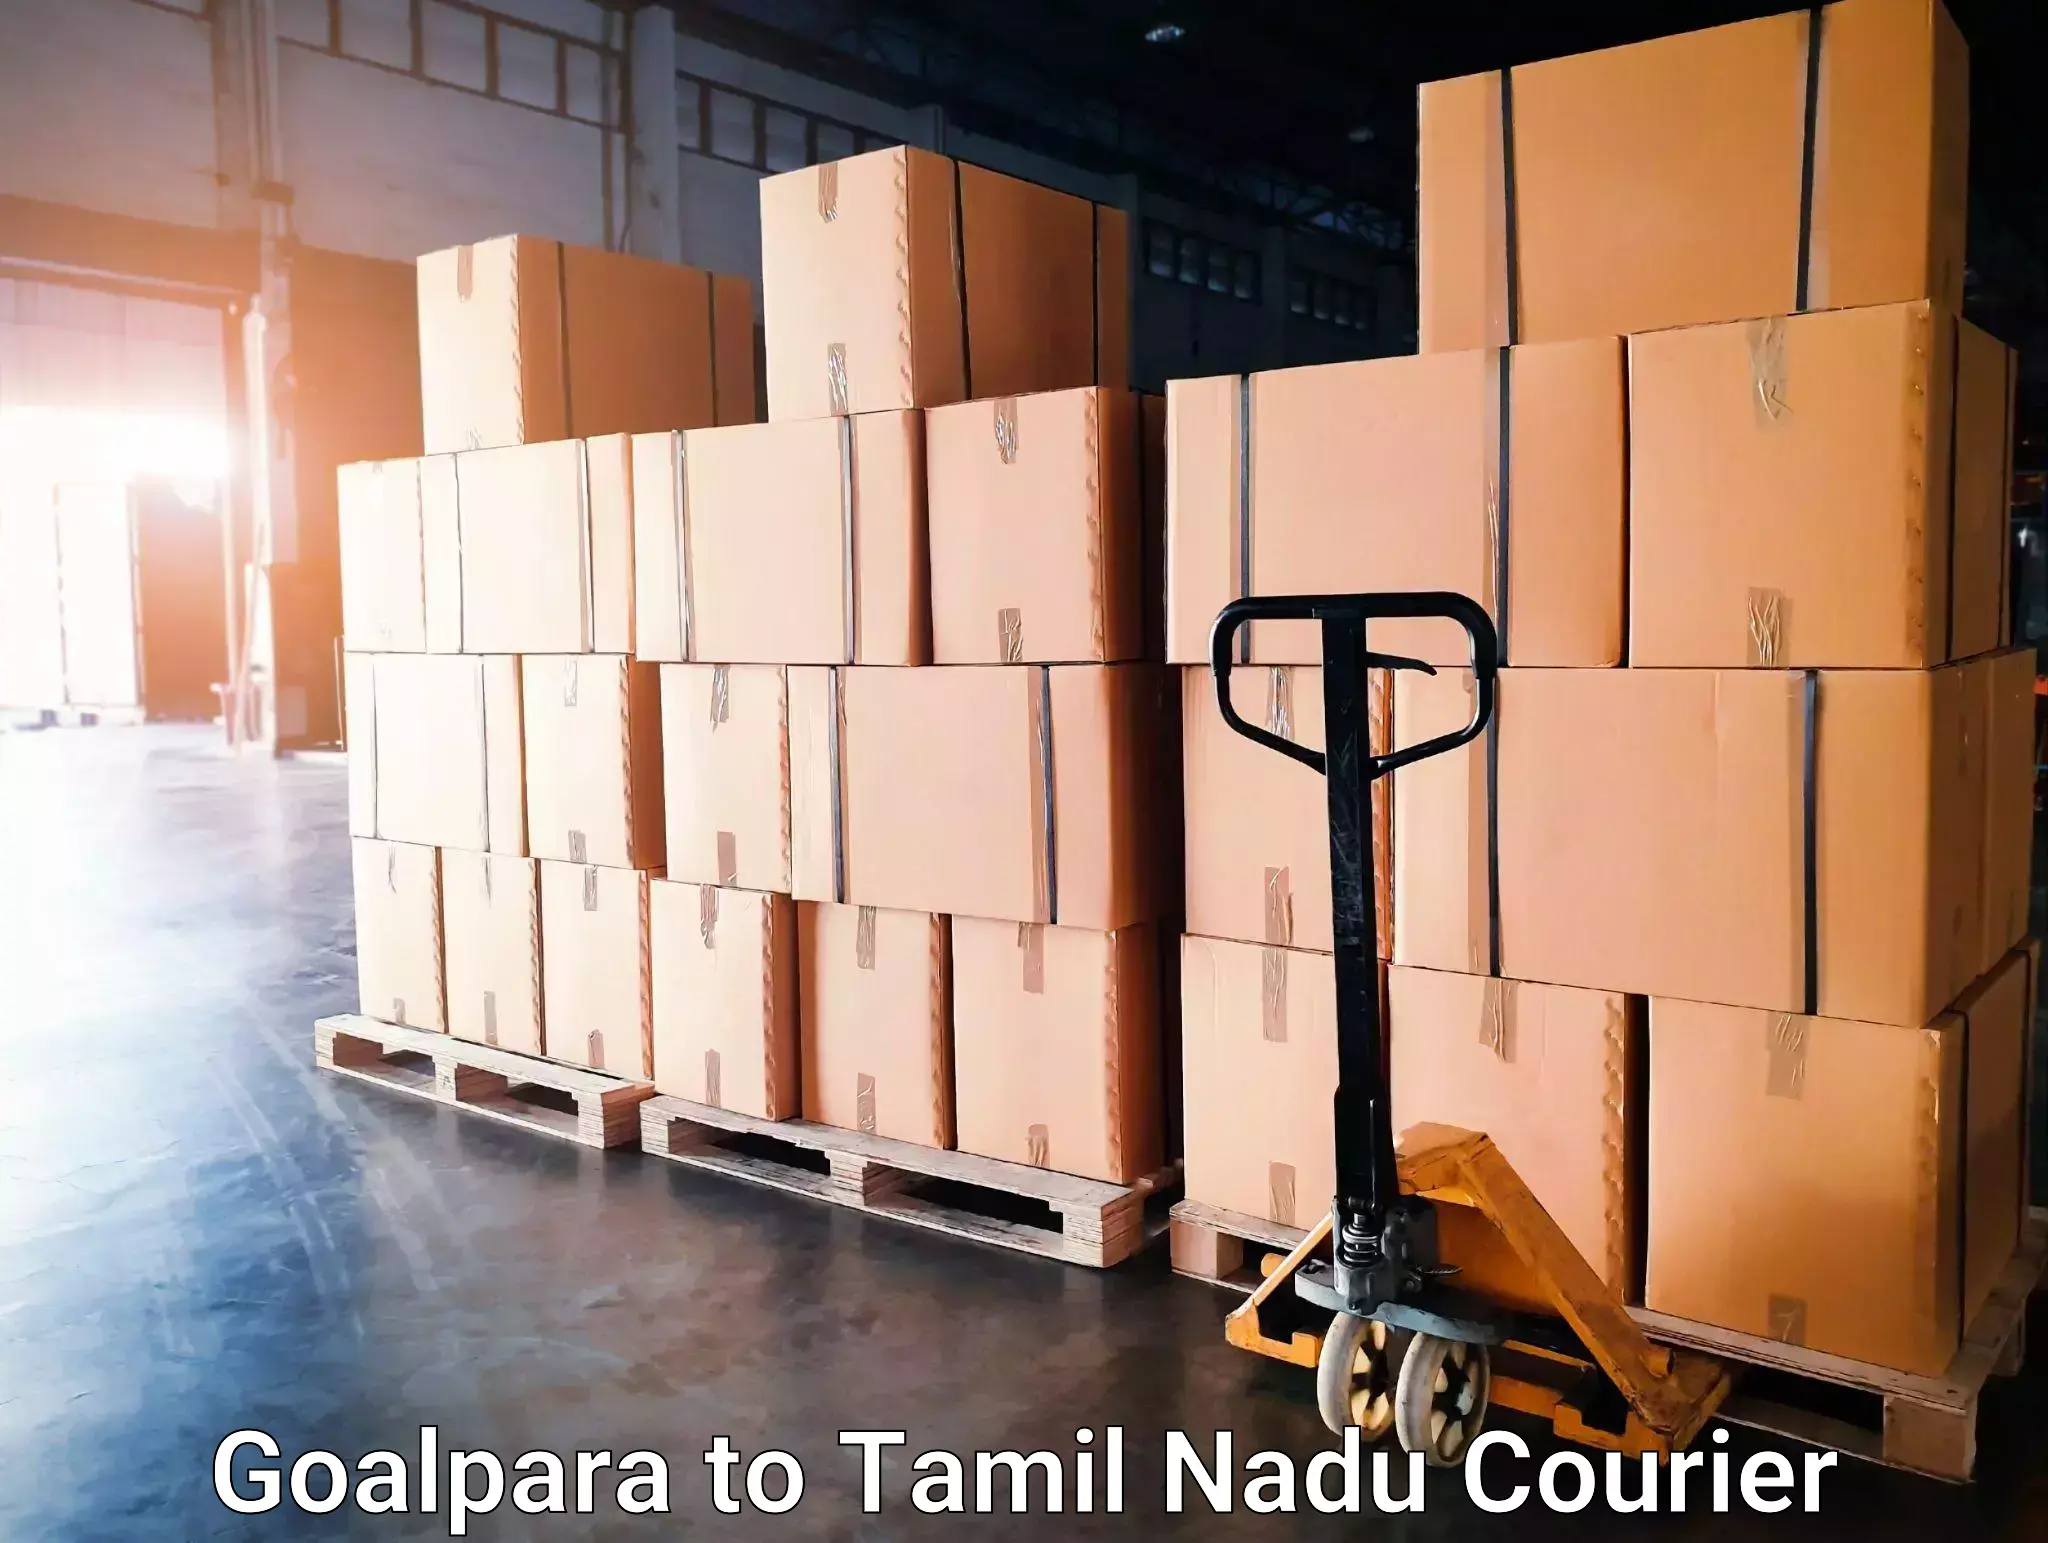 Courier service comparison Goalpara to Chennai Port